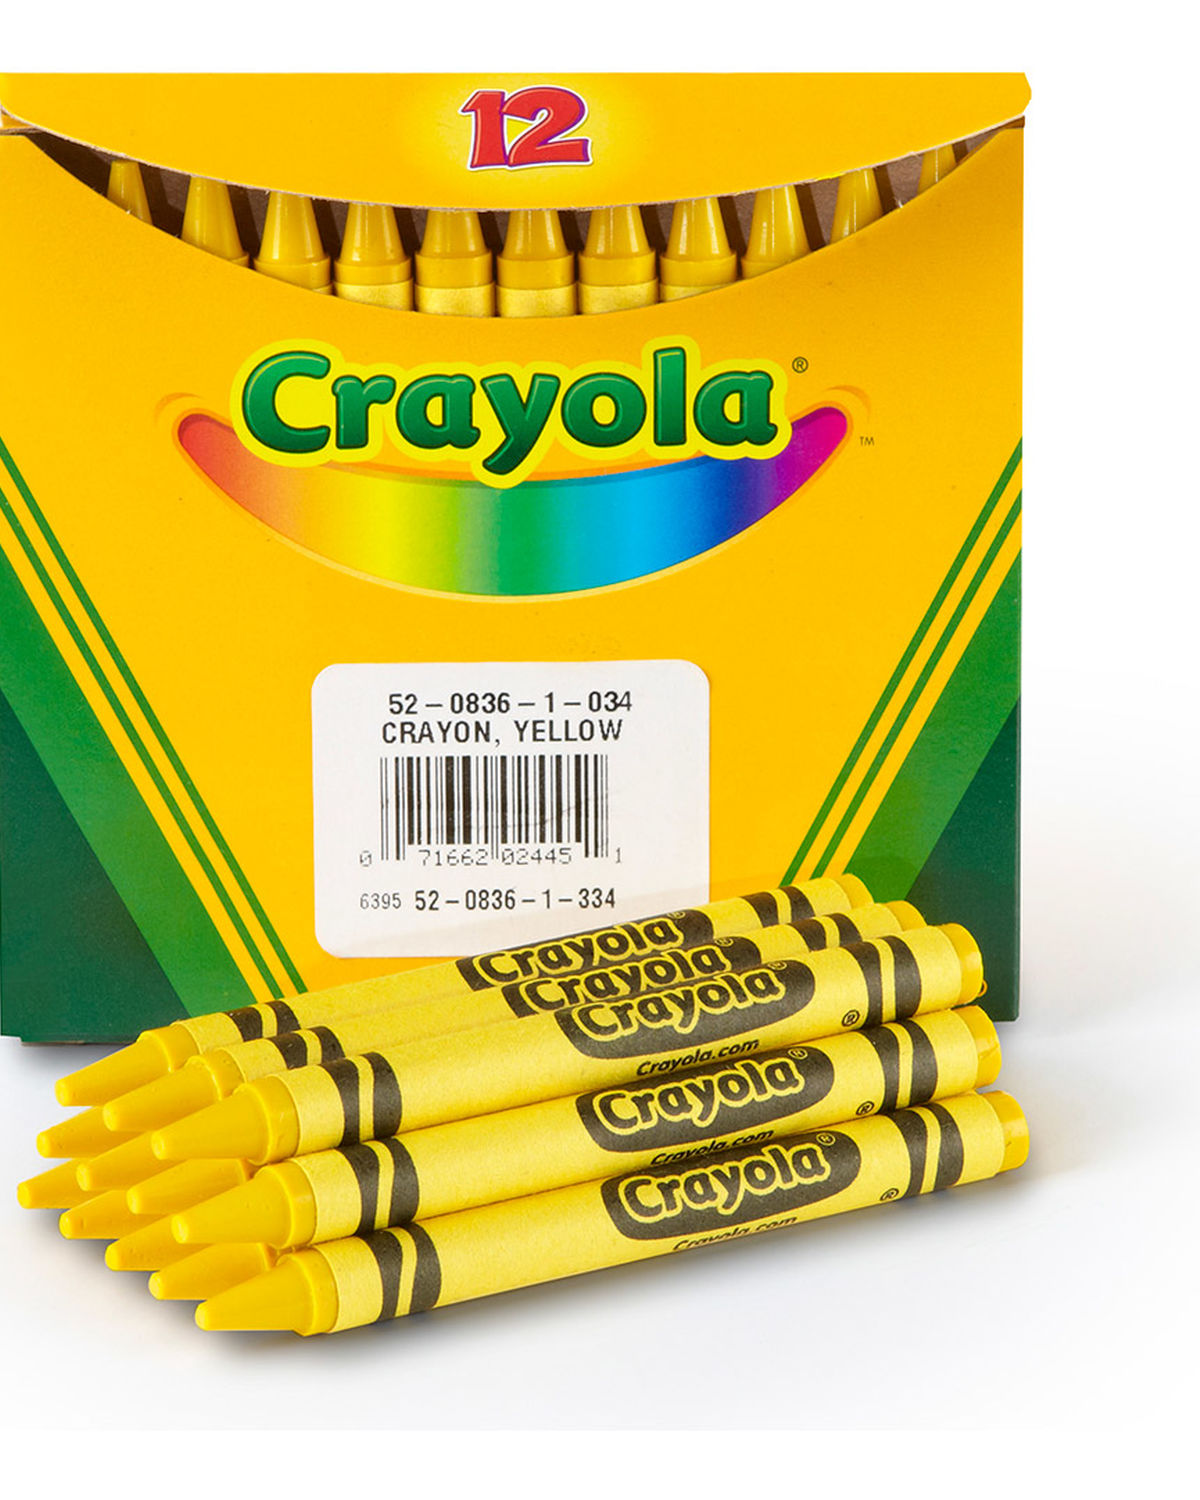 Crayola Silver Bulk Crayons, 12 Count